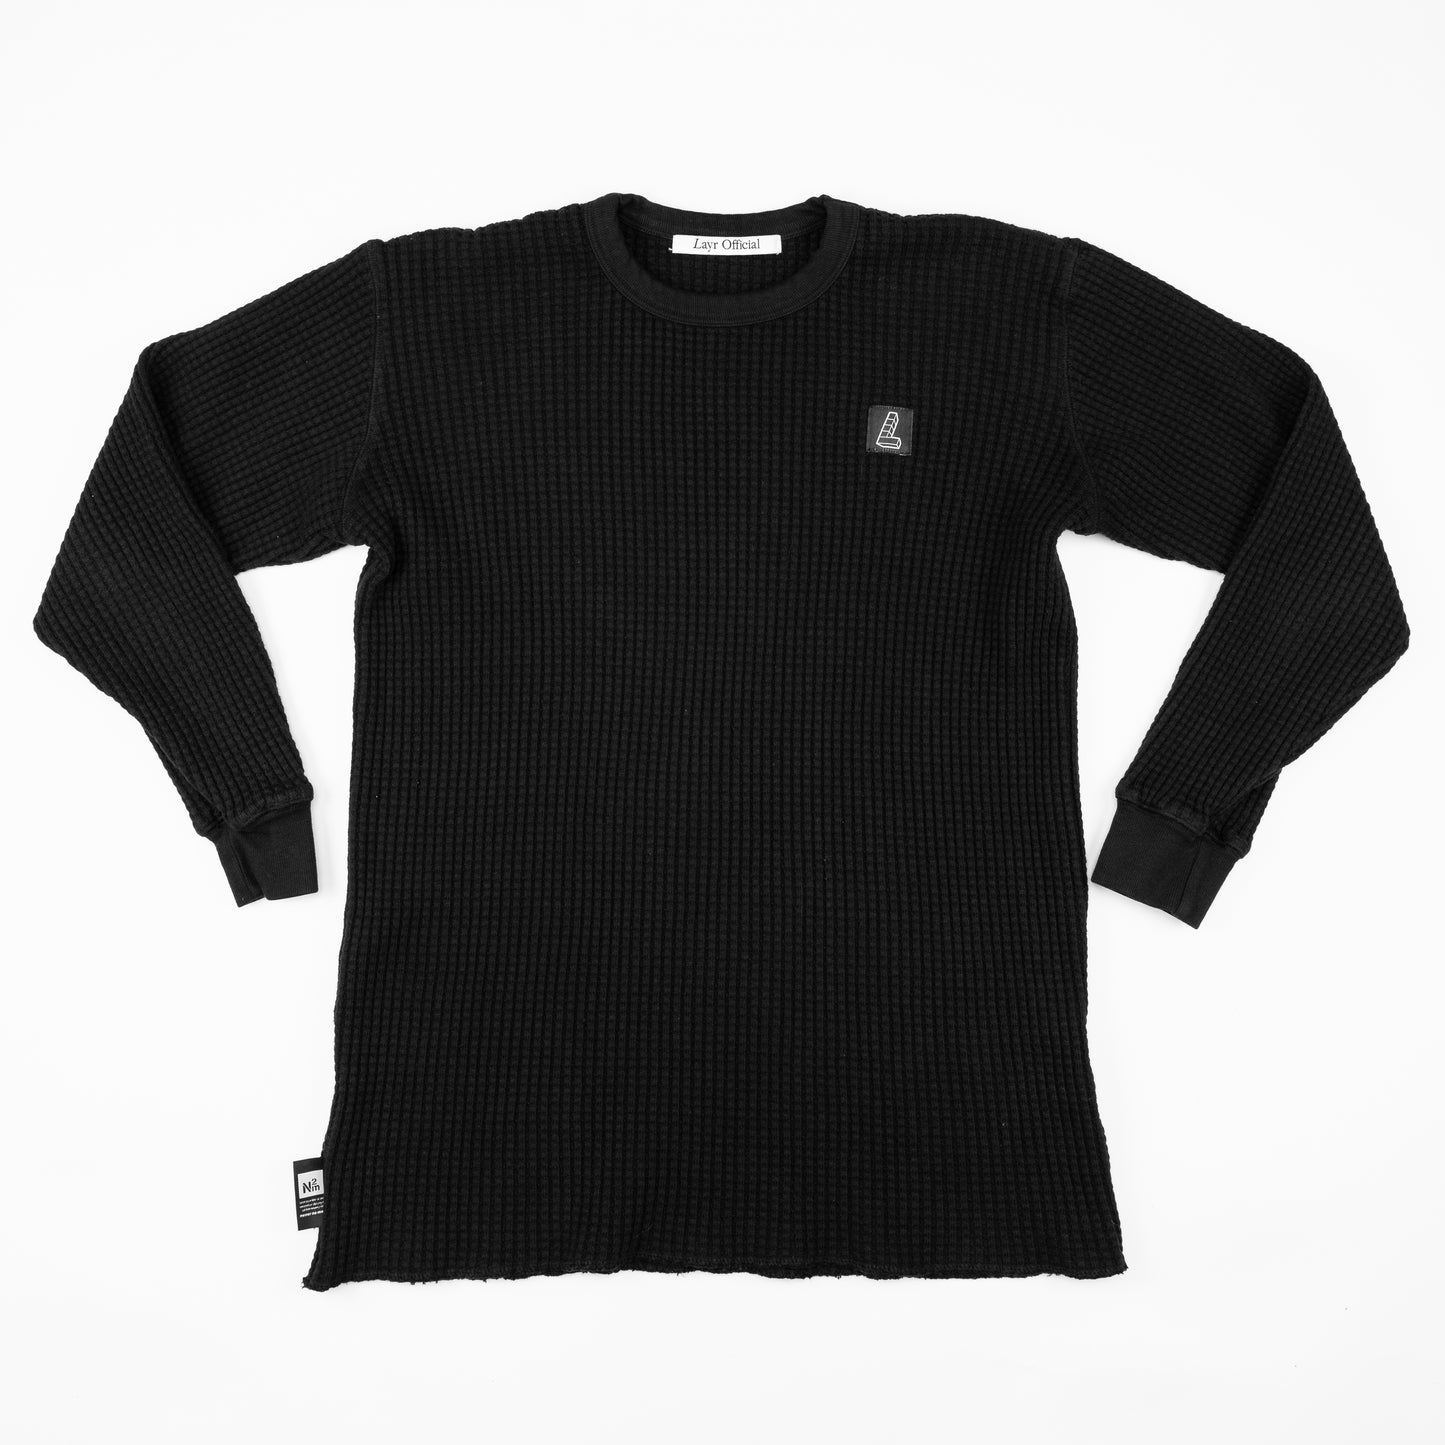 Thermal Sweater, Black